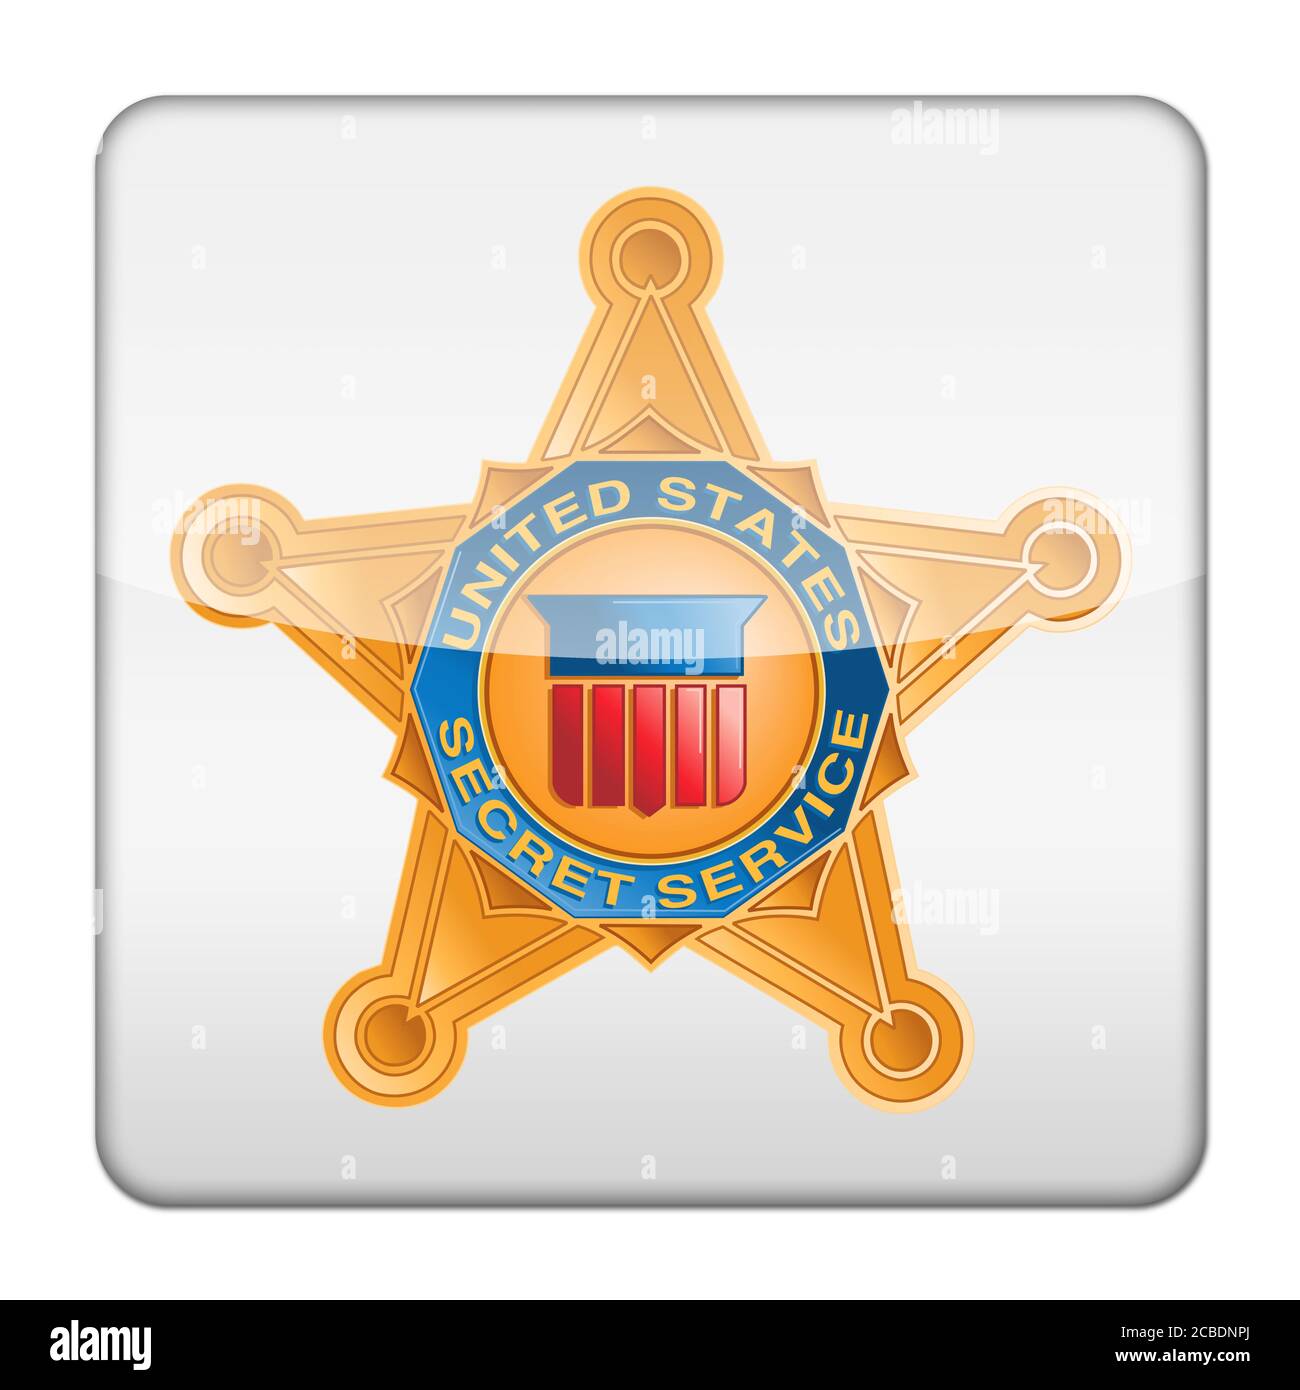 United States Secret Service logo icon isolated app button Stock Photo